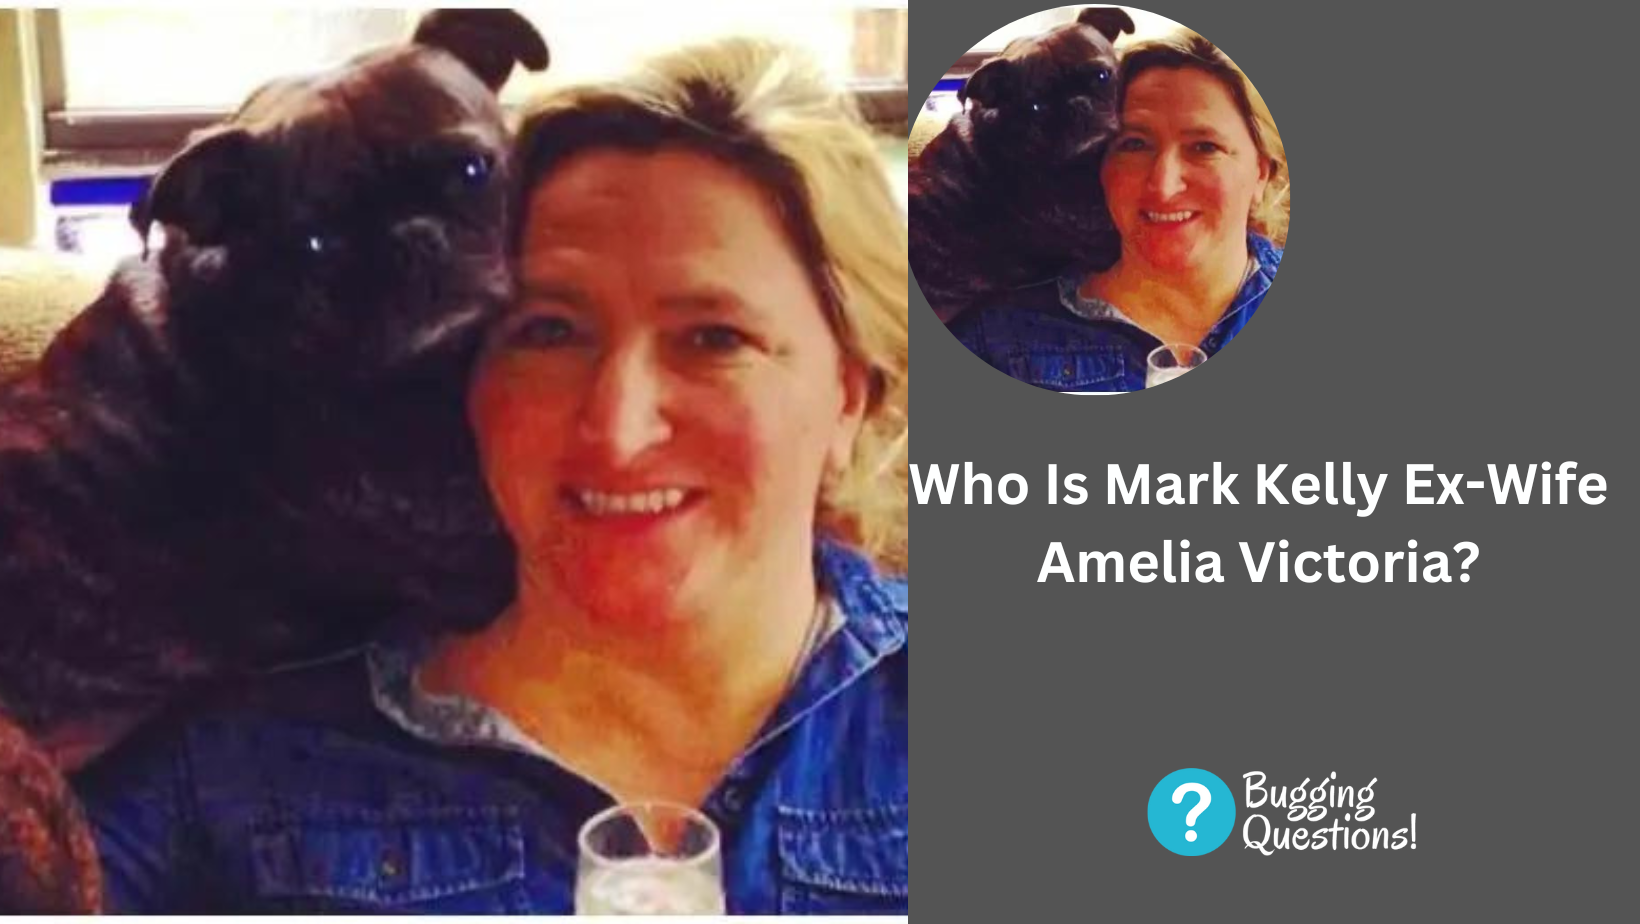 Who Is Mark Kelly Ex-Wife Amelia Victoria?